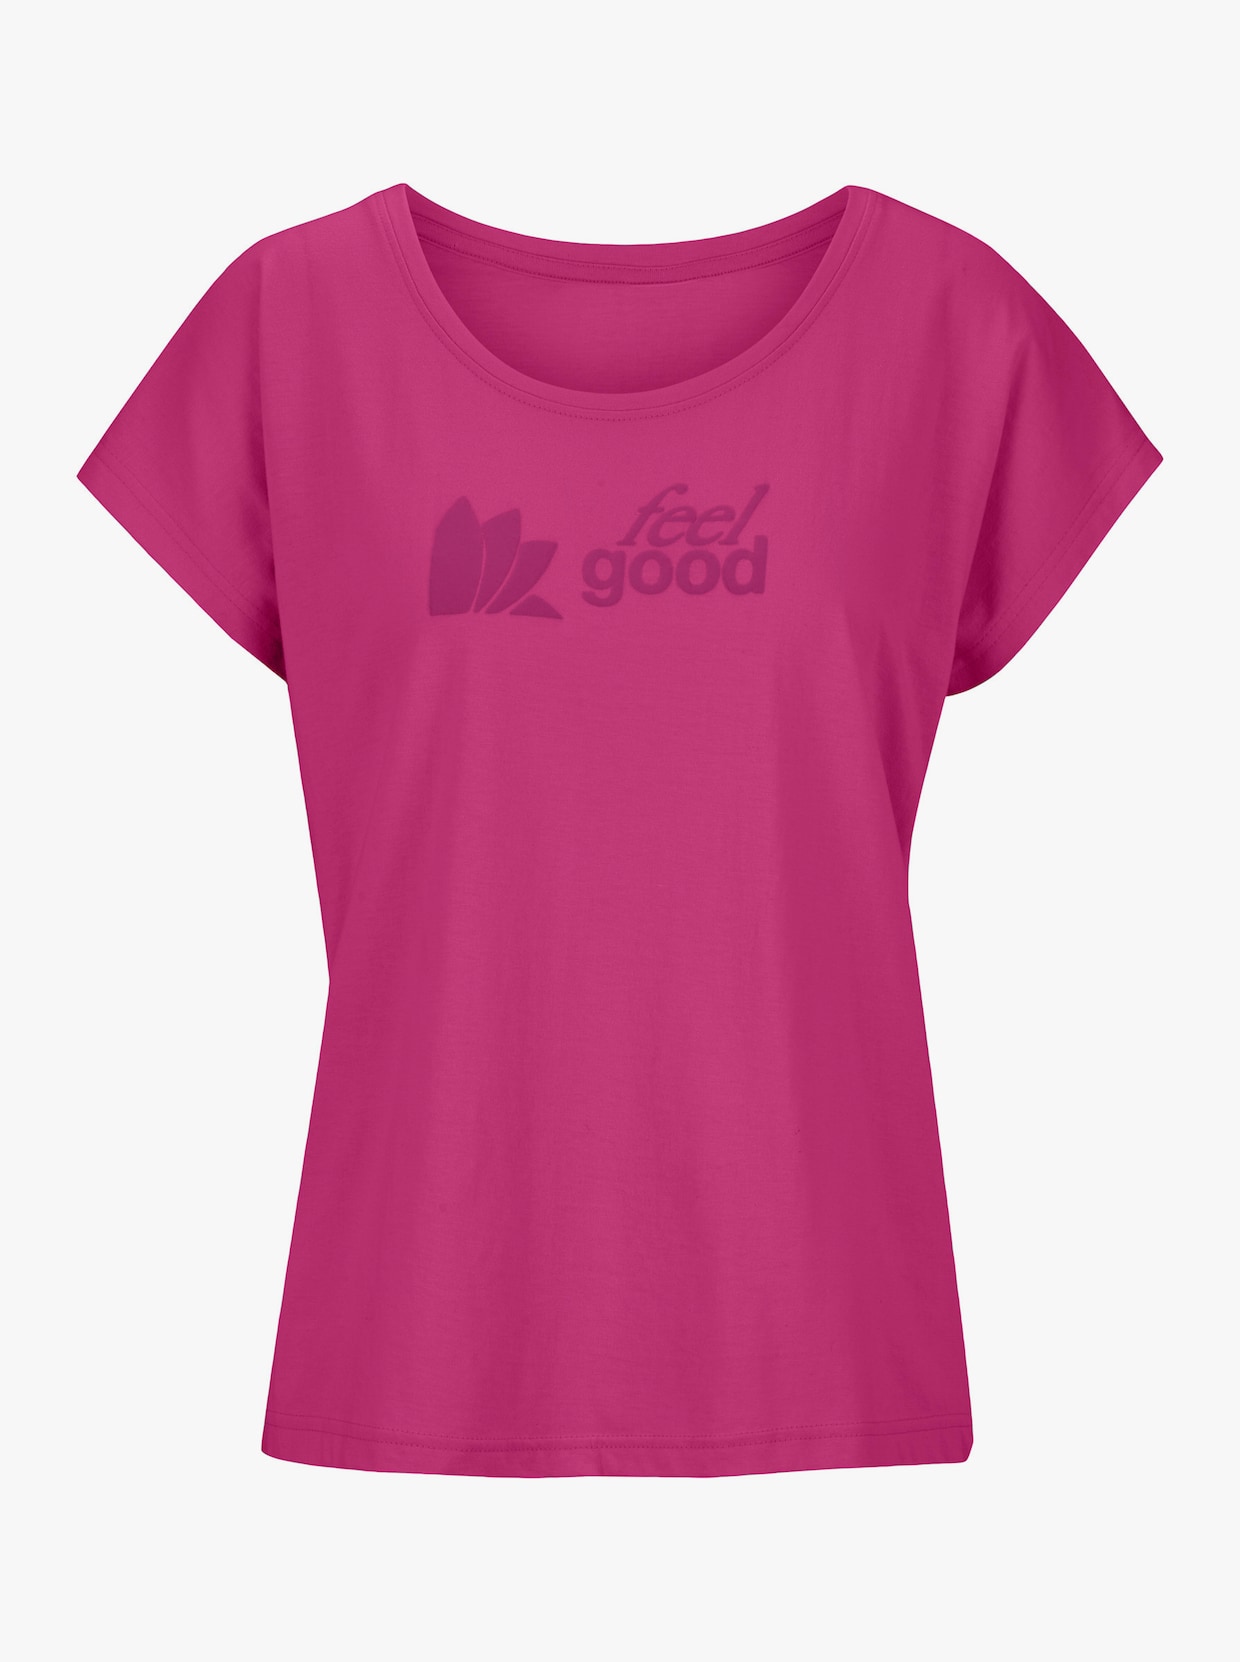 feel good Shirt - pink